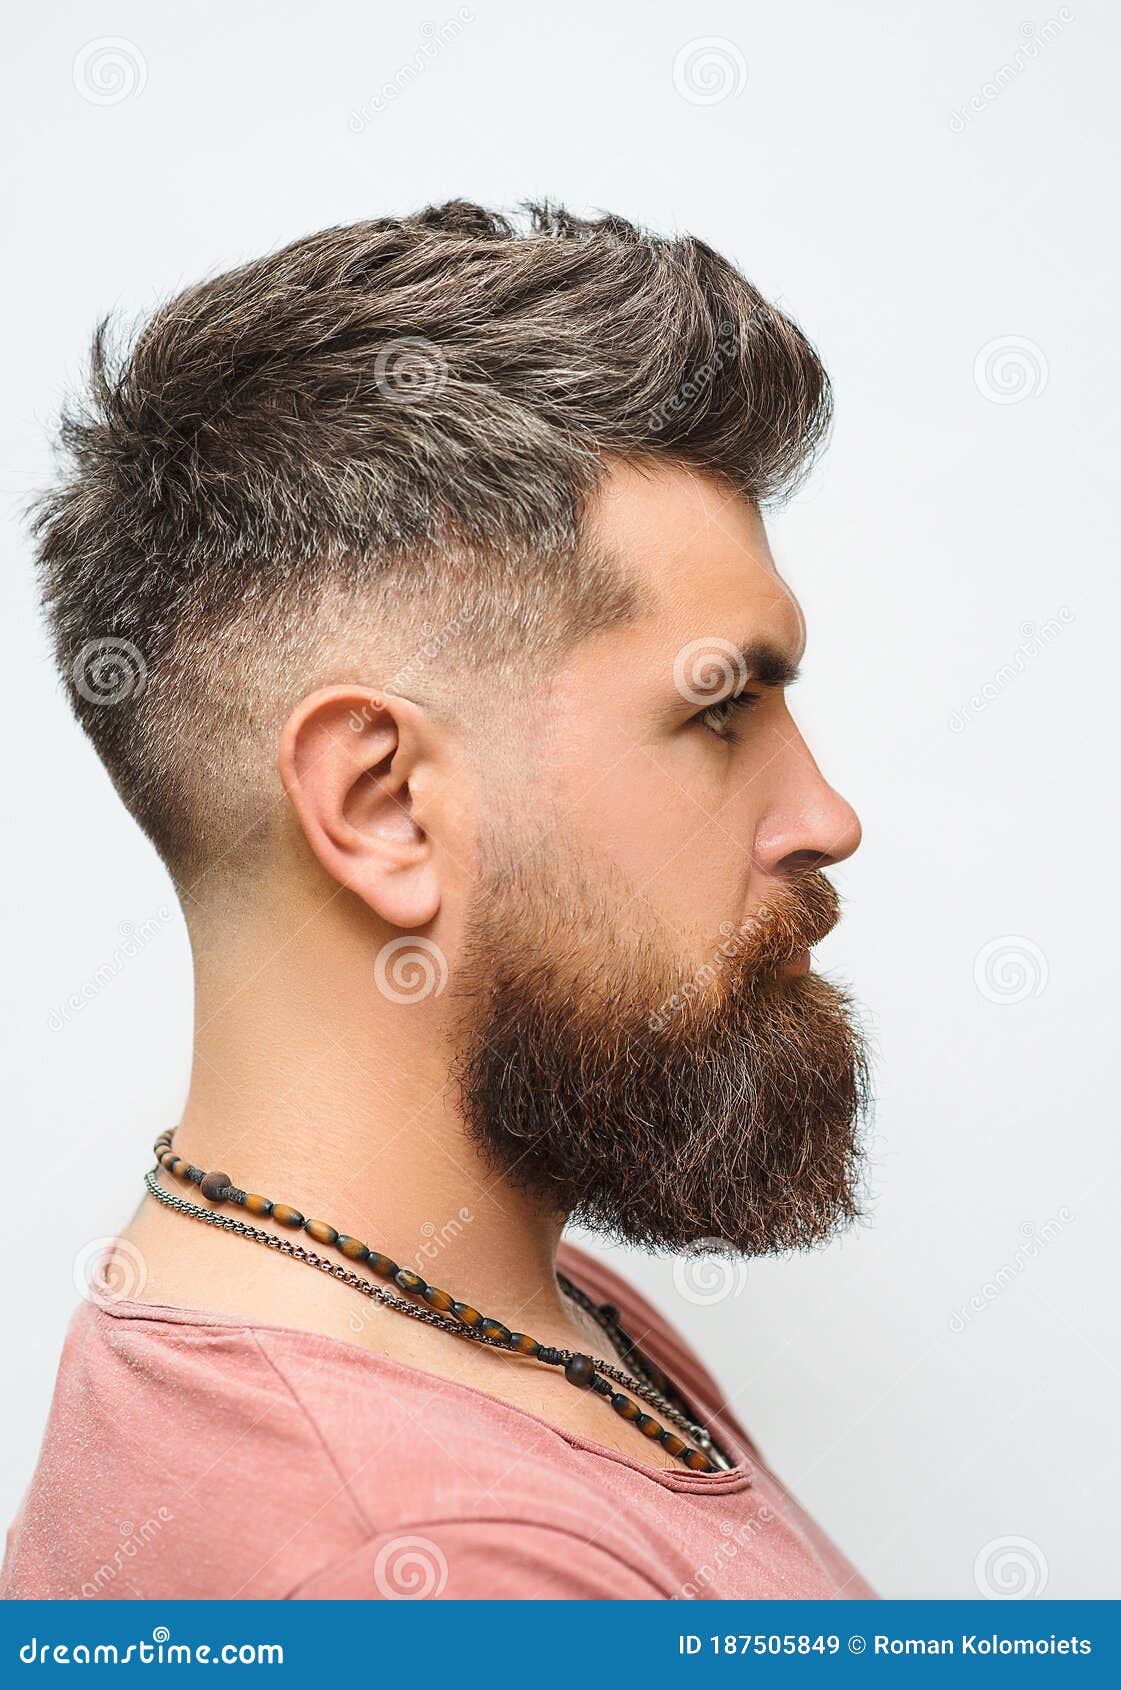 Mens Haircut in Barber Shop. Mens Haircut, Shaving. Stock Image - Image of  fashionable, look: 187505849